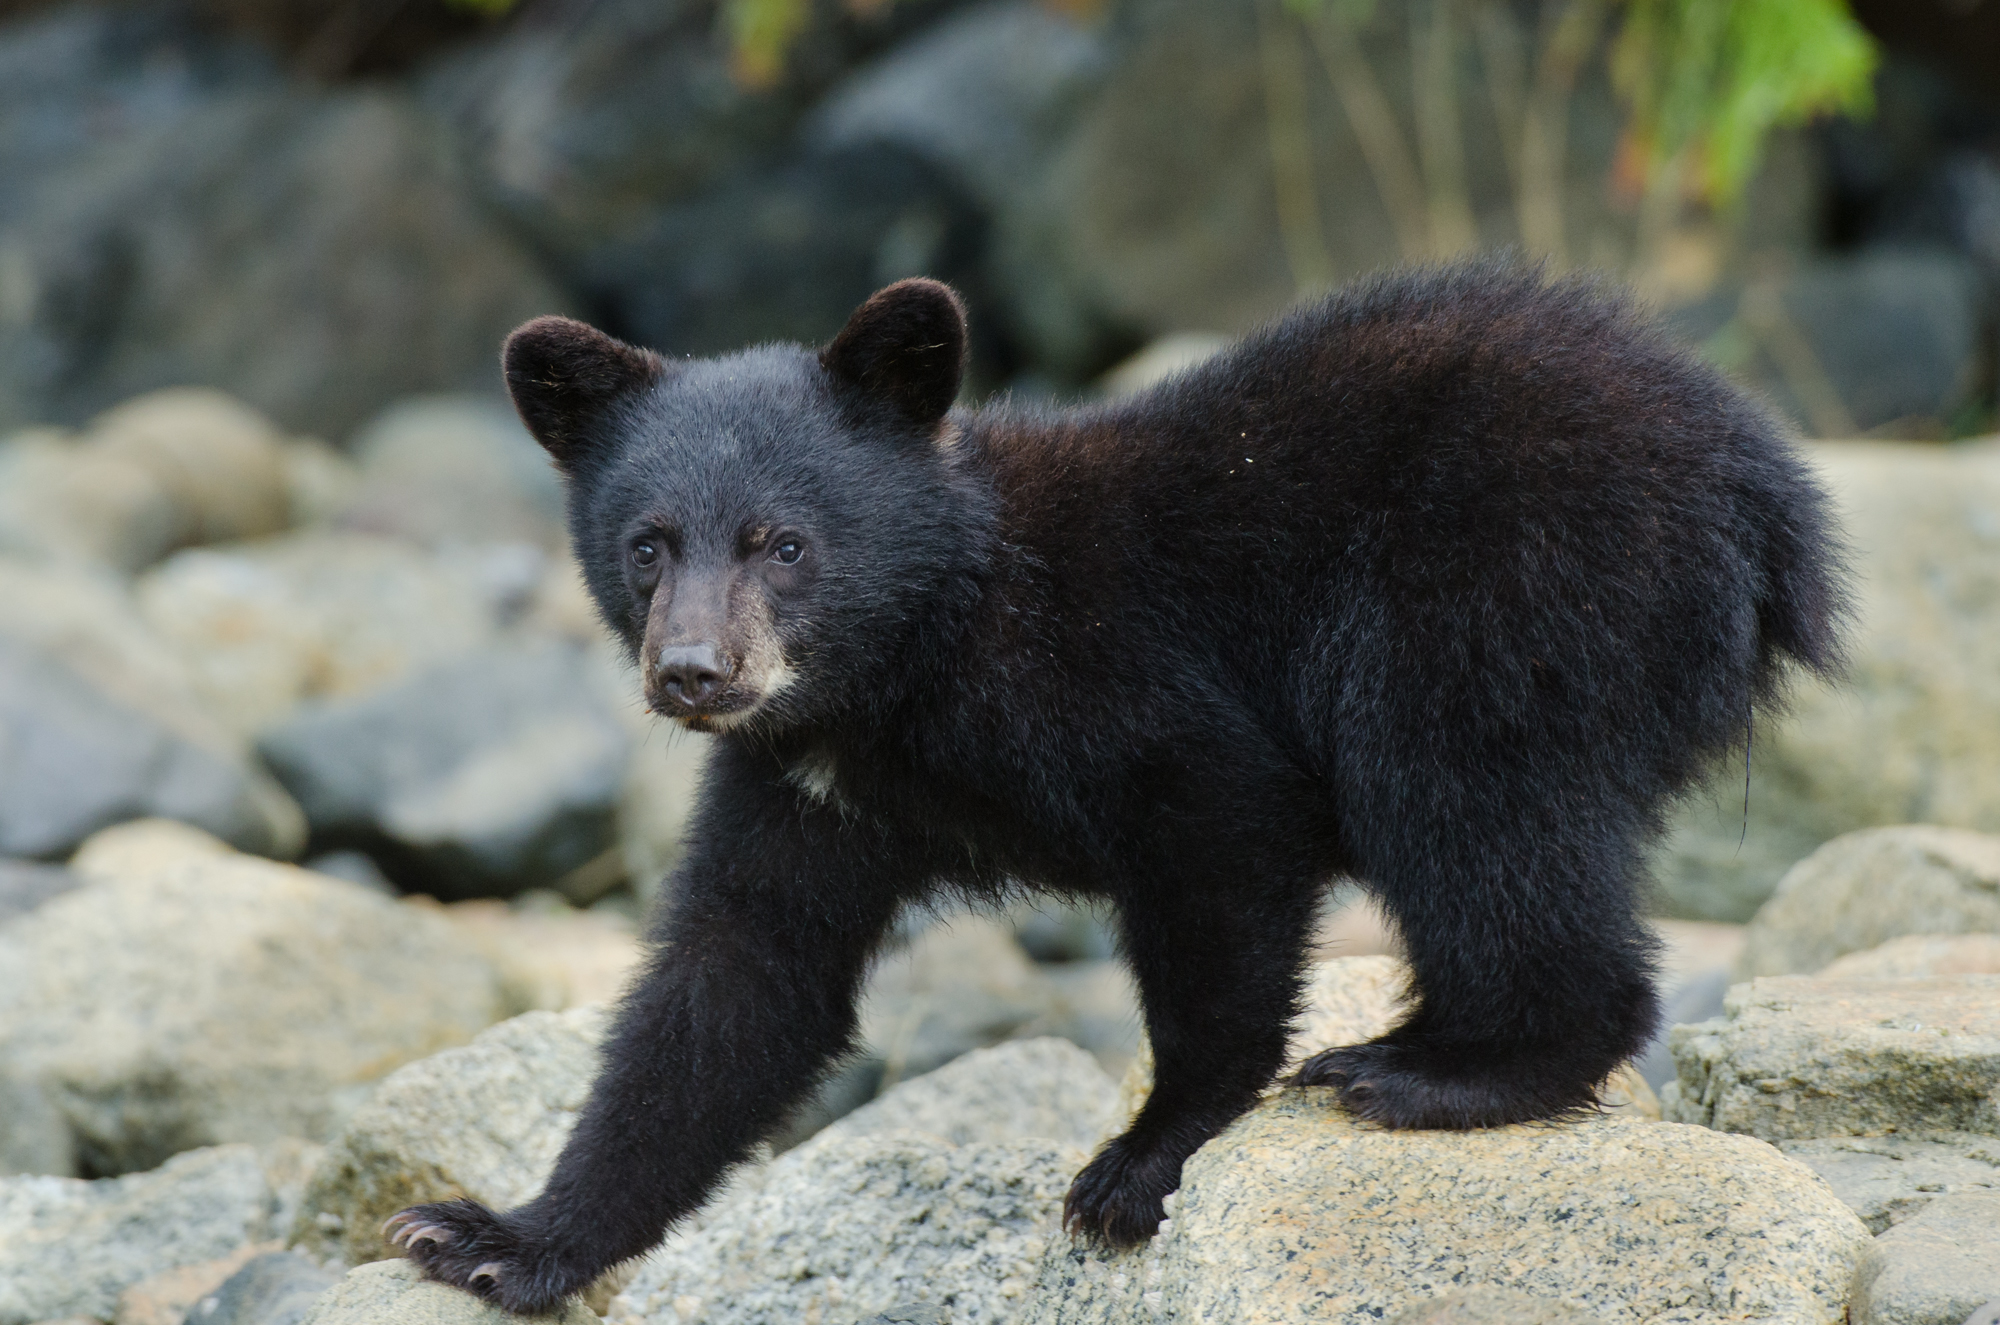  A 7-month-old black bear cub curious of a mysterious shutter noise.&nbsp; 